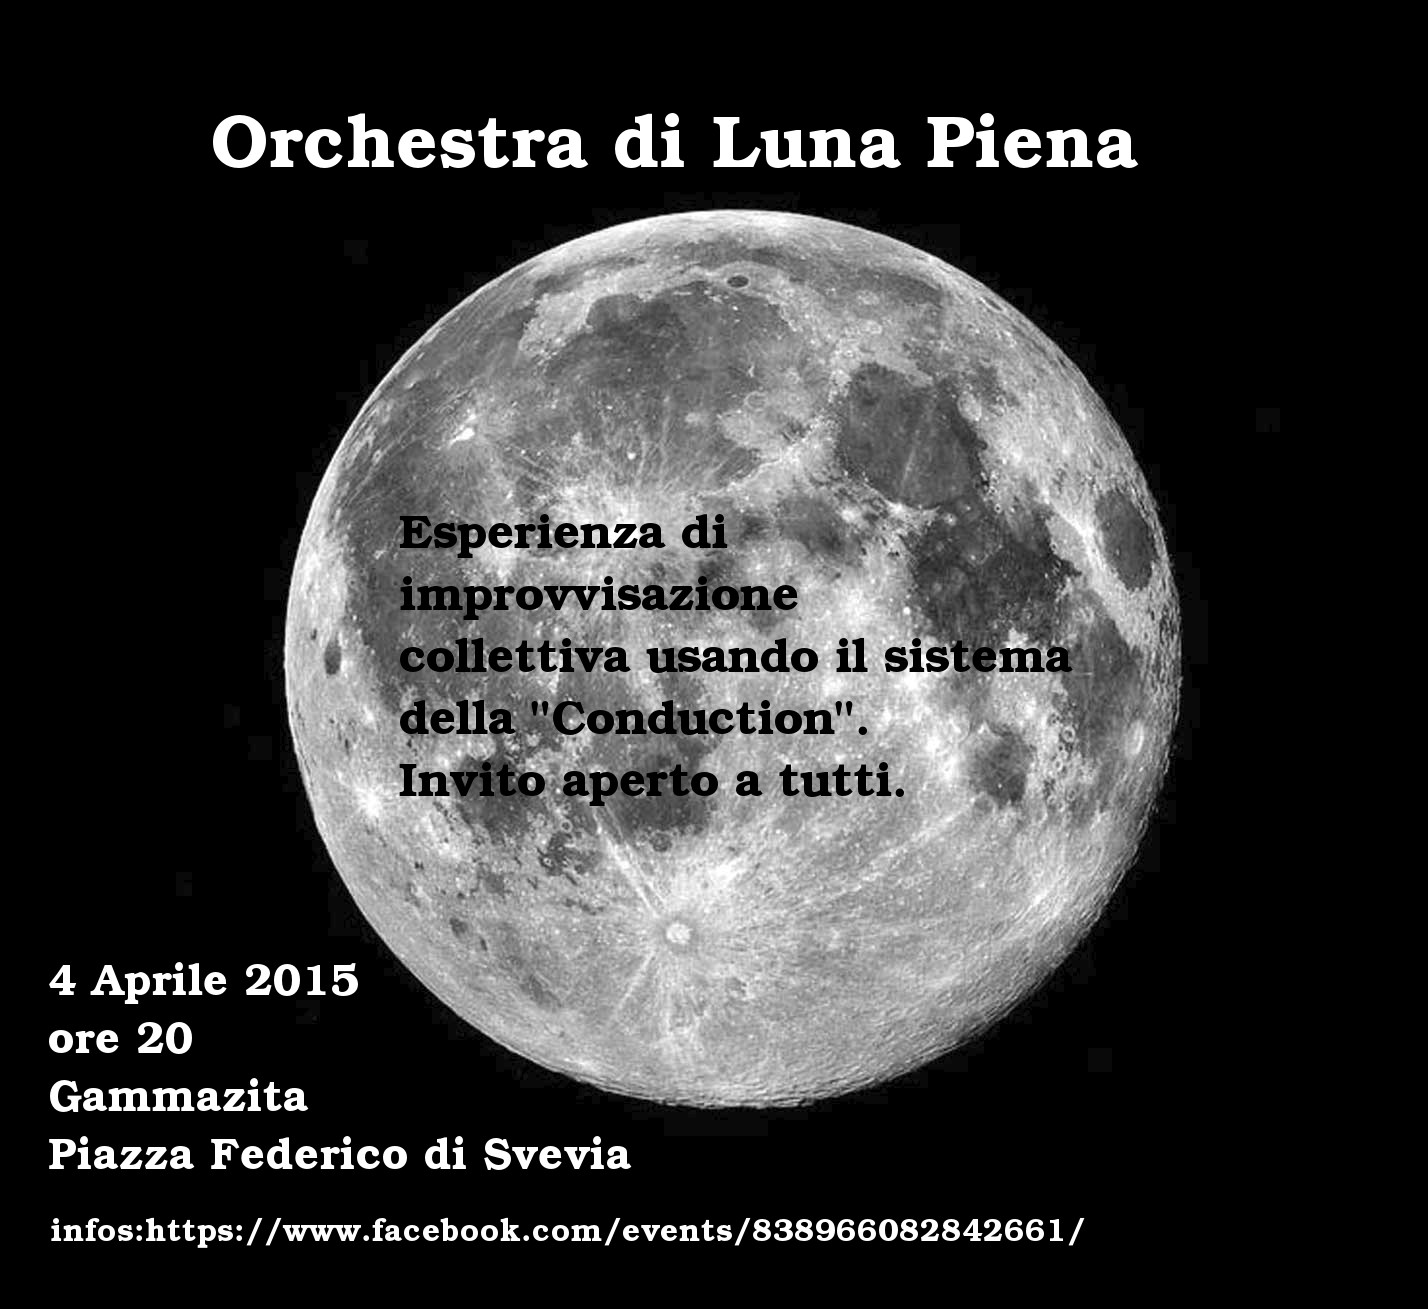 Orchestra di Luna Piena